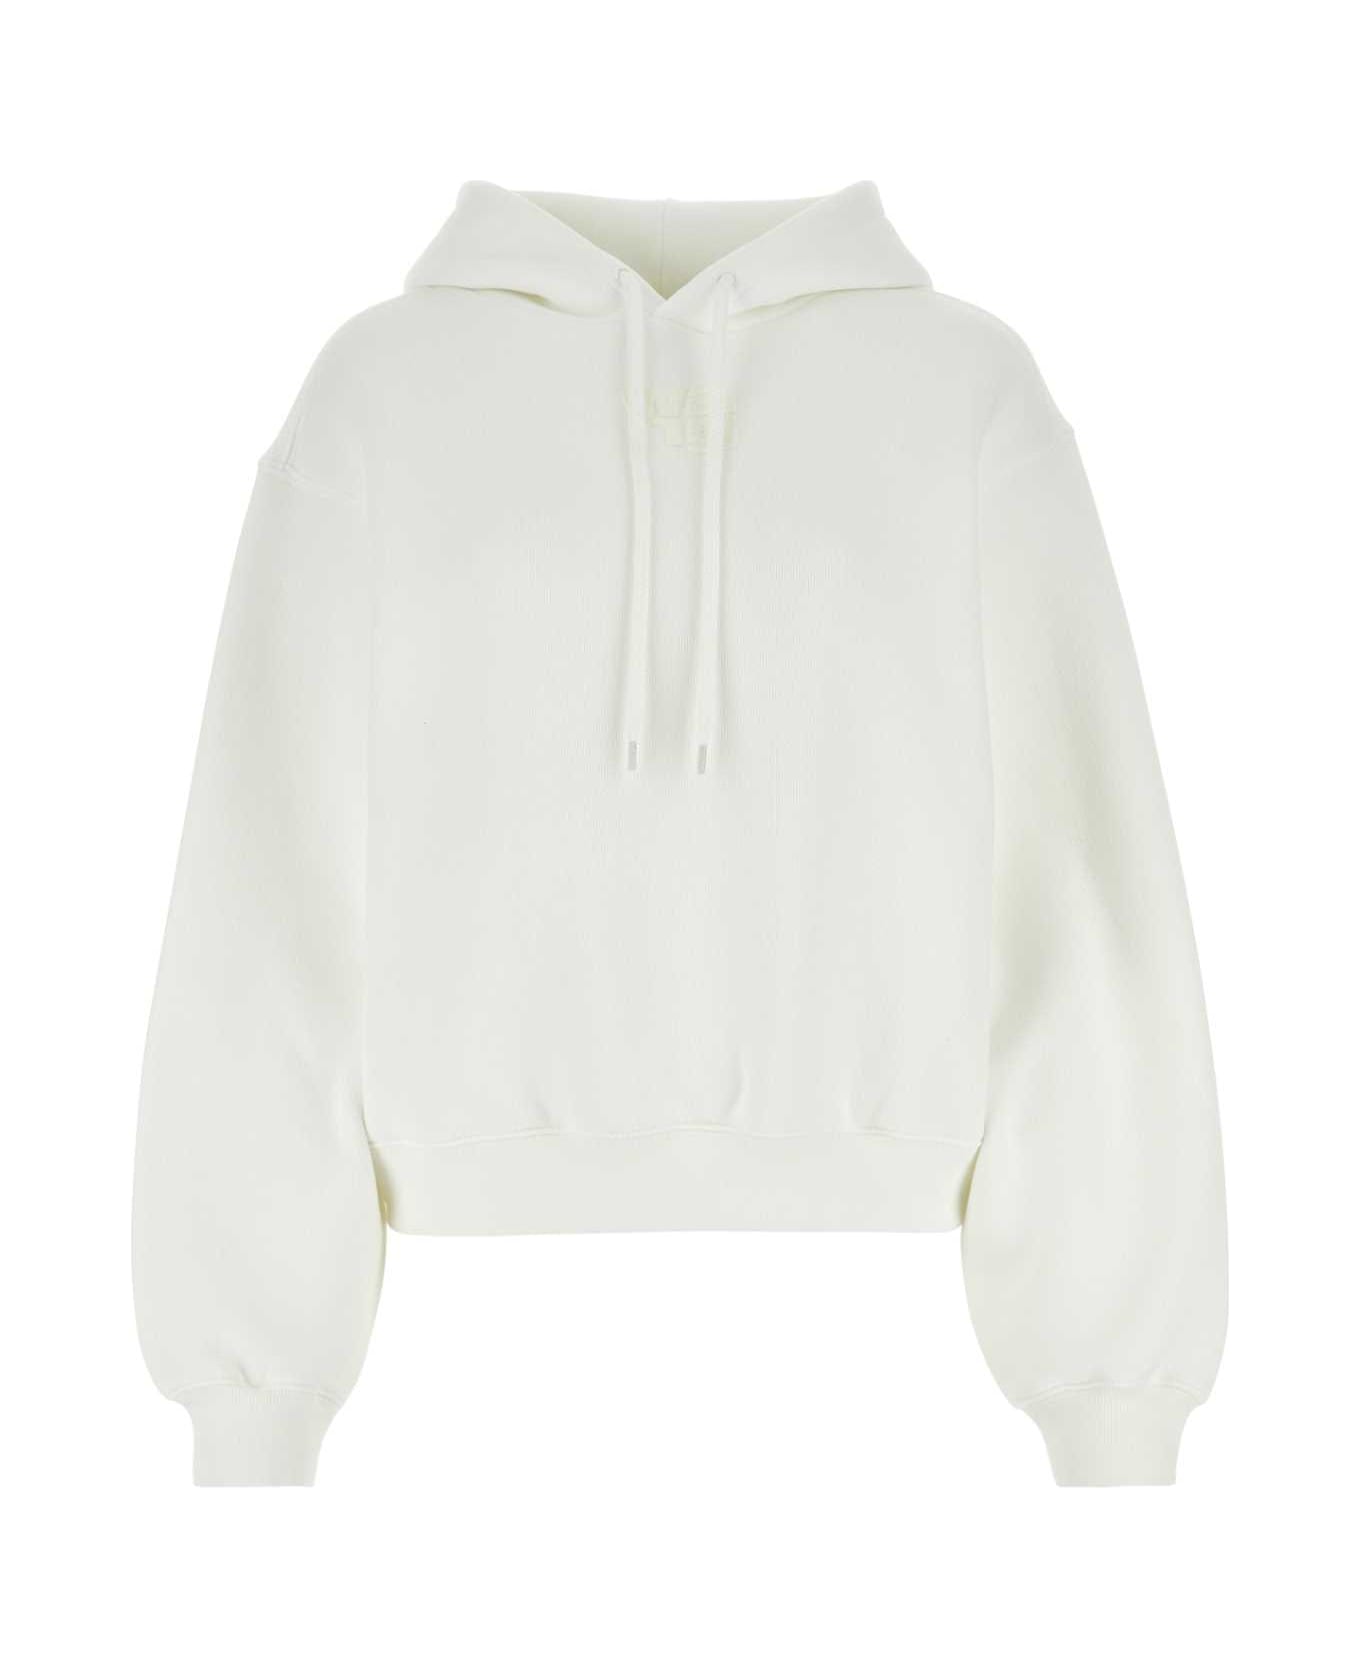 T by Alexander Wang White Cotton Blend Oversize Sweatshirt - 100